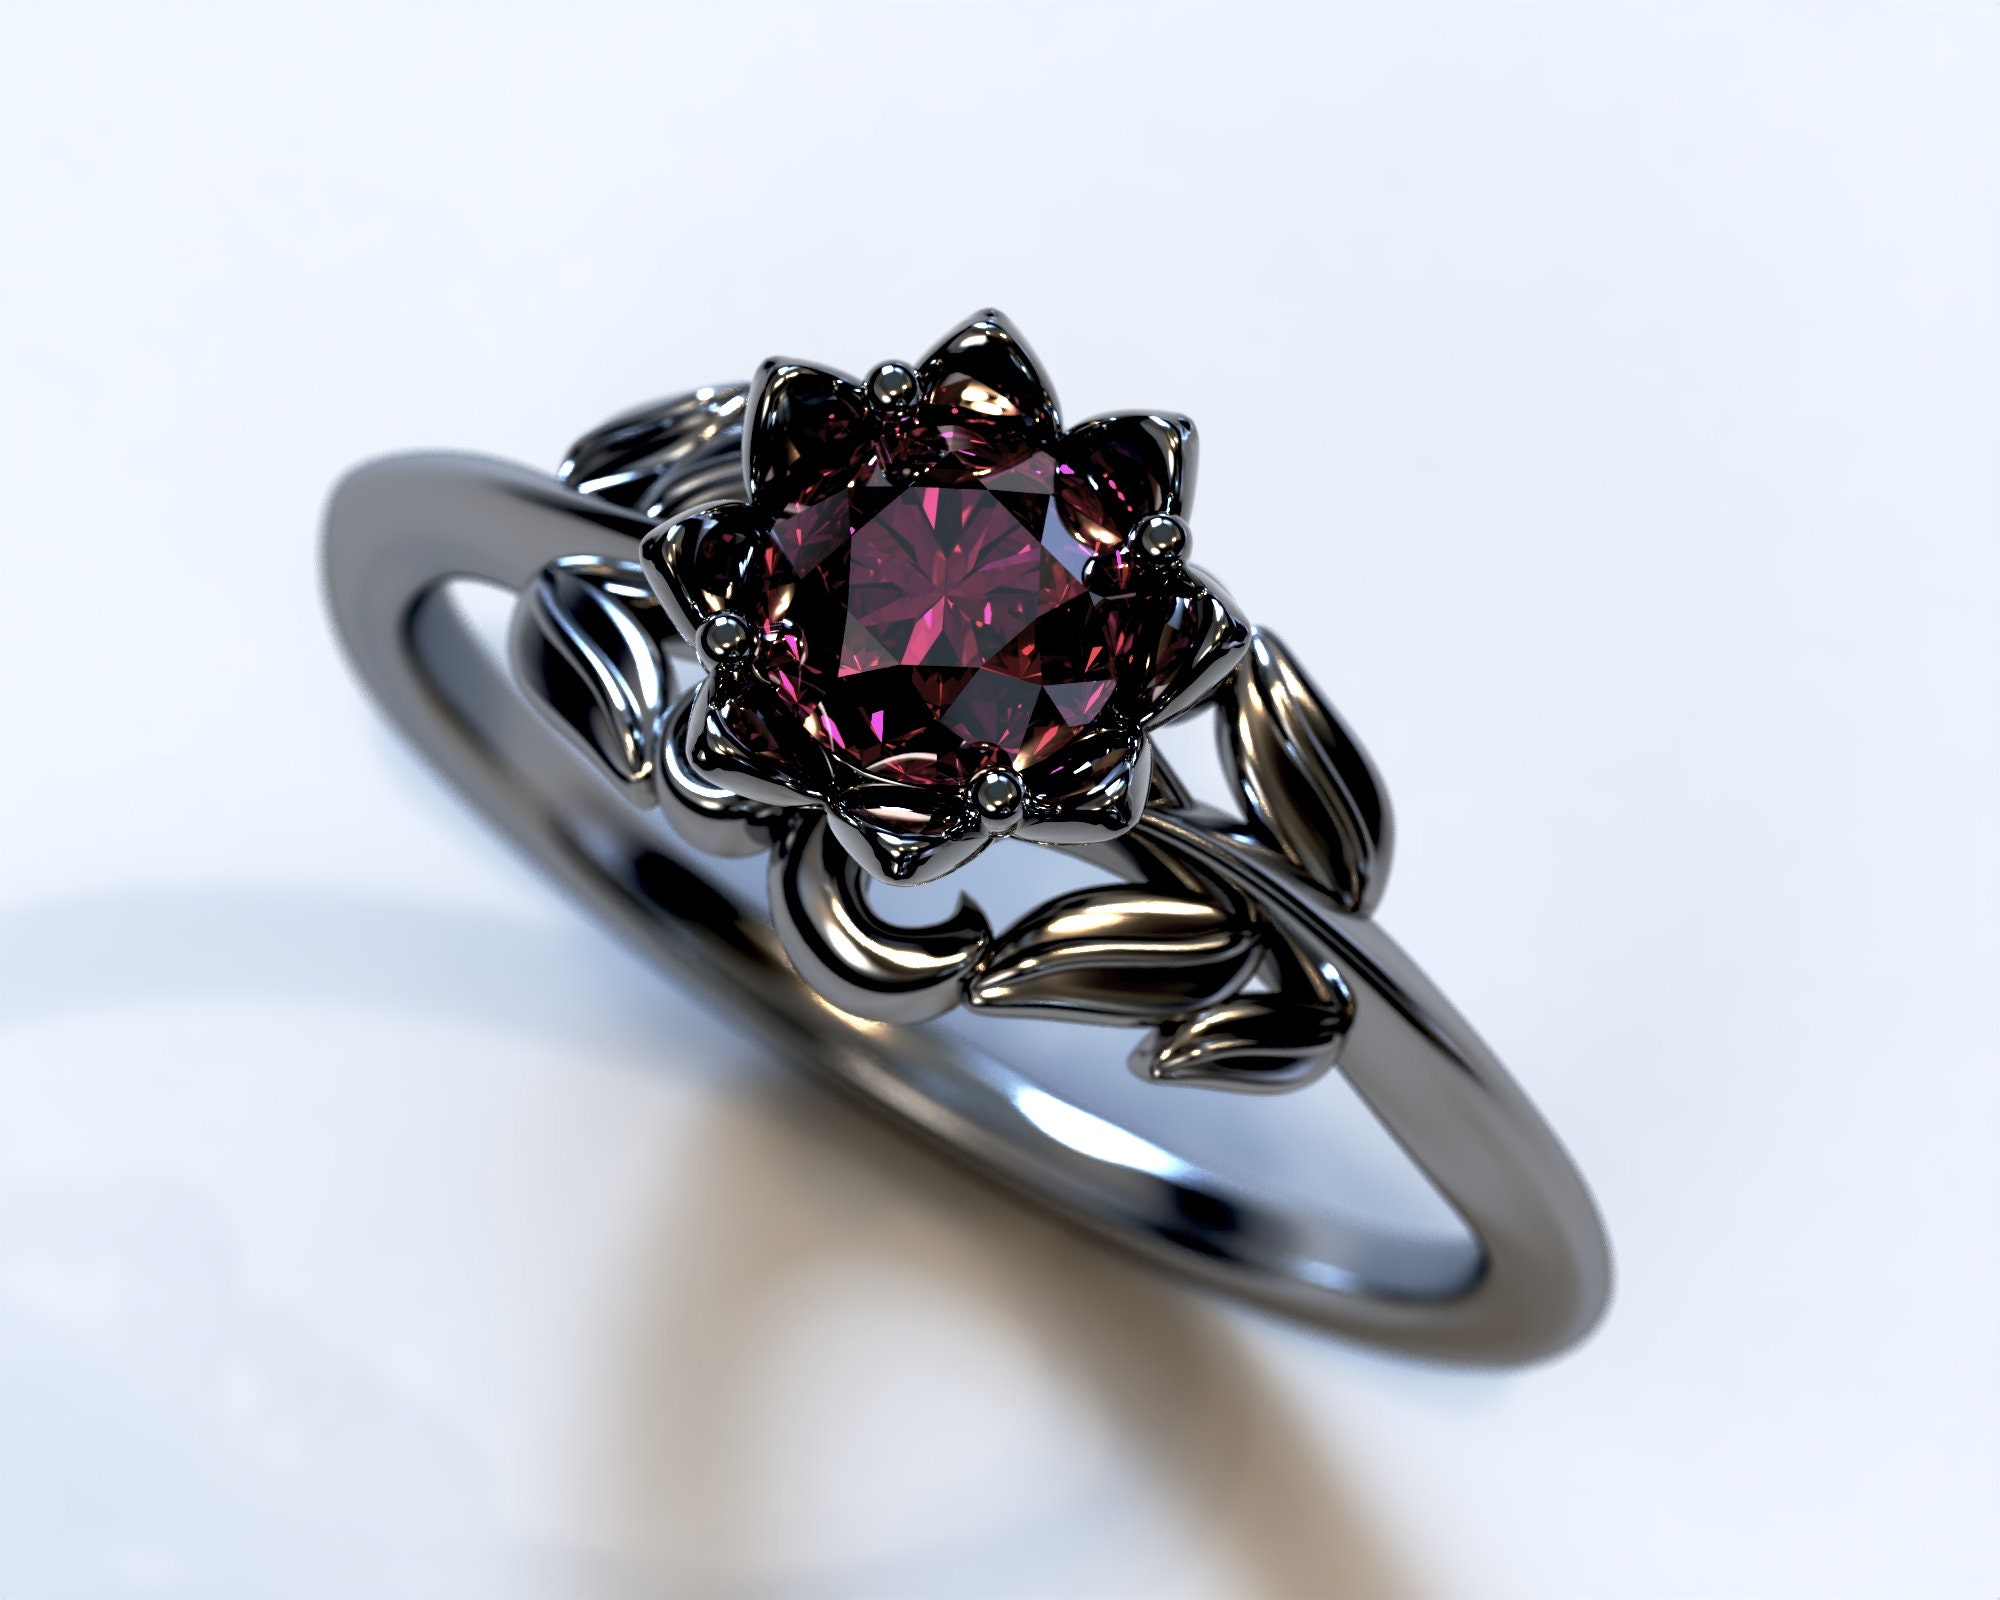 Flower Engagement Ring With Ruby / Black Gold Engagement Ring / Unique Ruby  Ring / Nature Inspired Ring / Leaf Design Ring / Flower Ring 